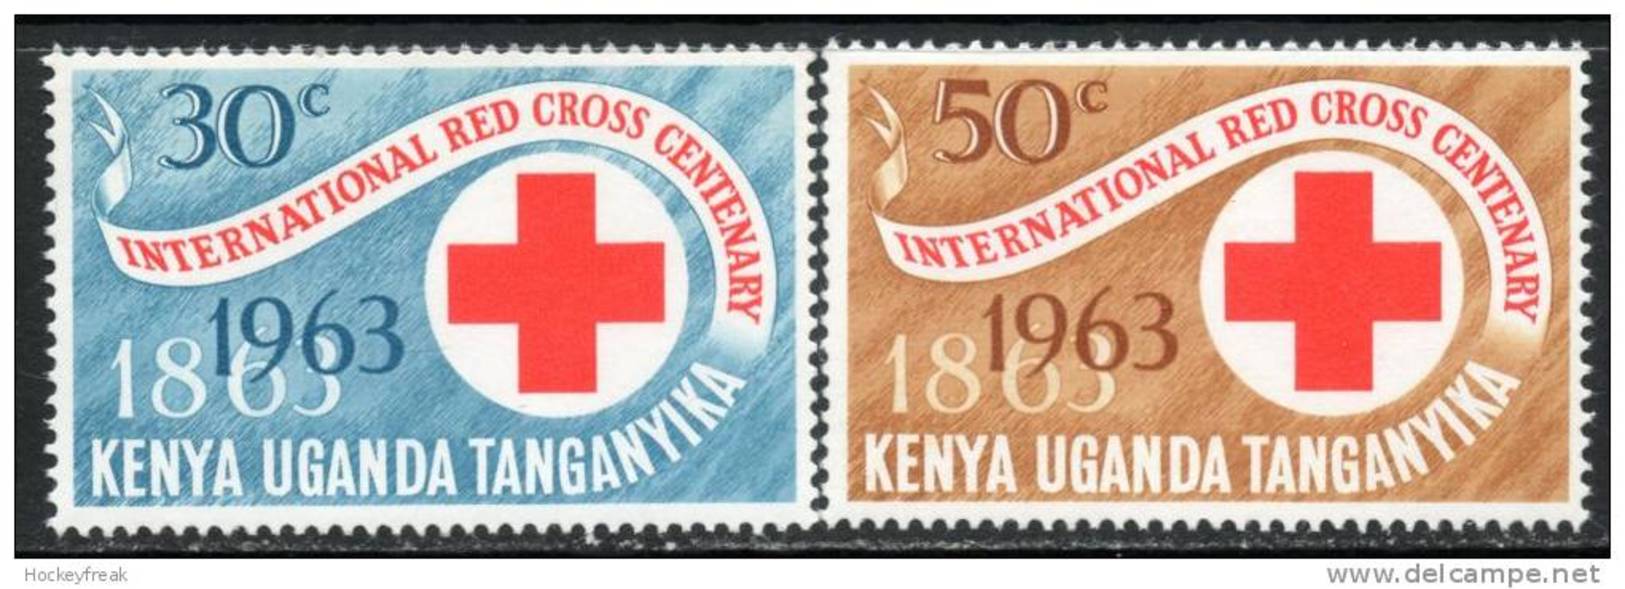 Kenya, Uganda & Tanganyika 1963 - Red Cross Centenary  SG205-206 MNH Cat £4 SG2018 - Kenya, Uganda & Tanganyika